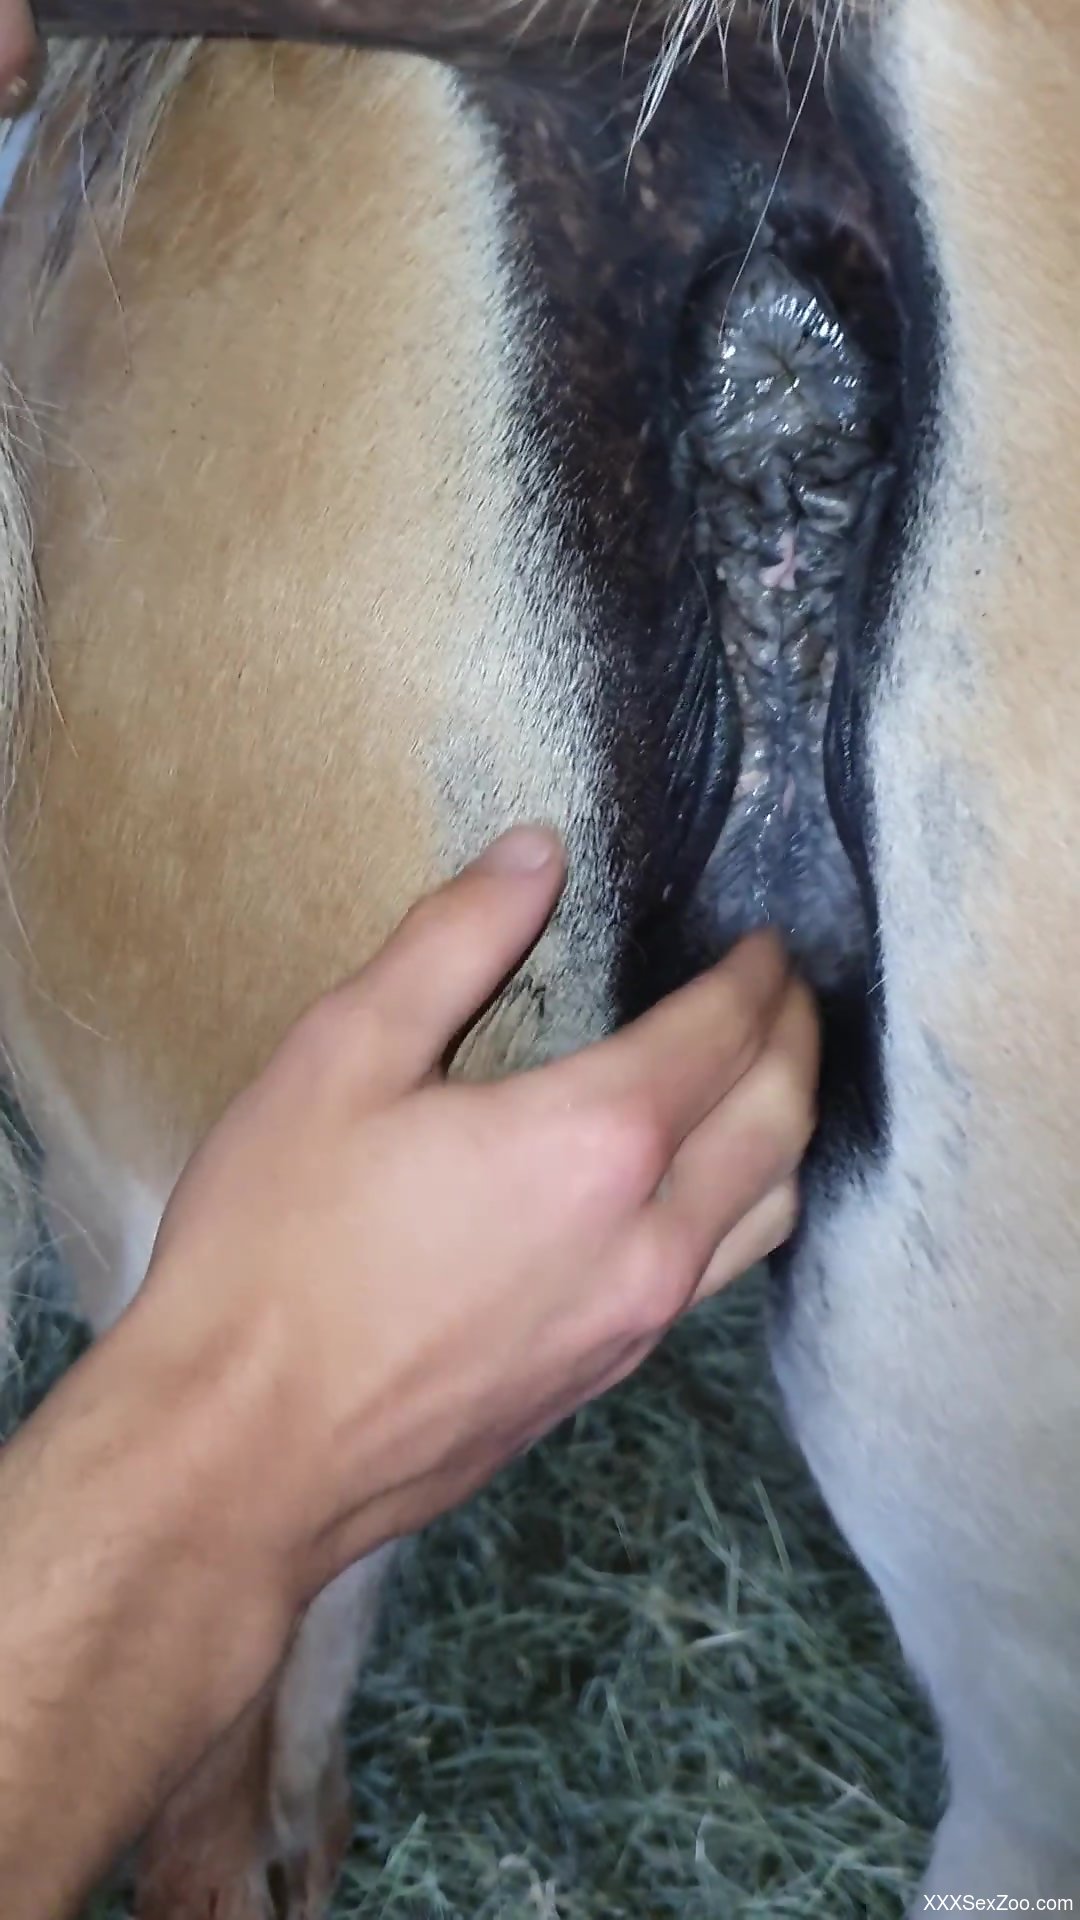 Sexy Mare Fuck - Horny guy finger fucks his female horse in harsh modes - XXXSexZoo.com